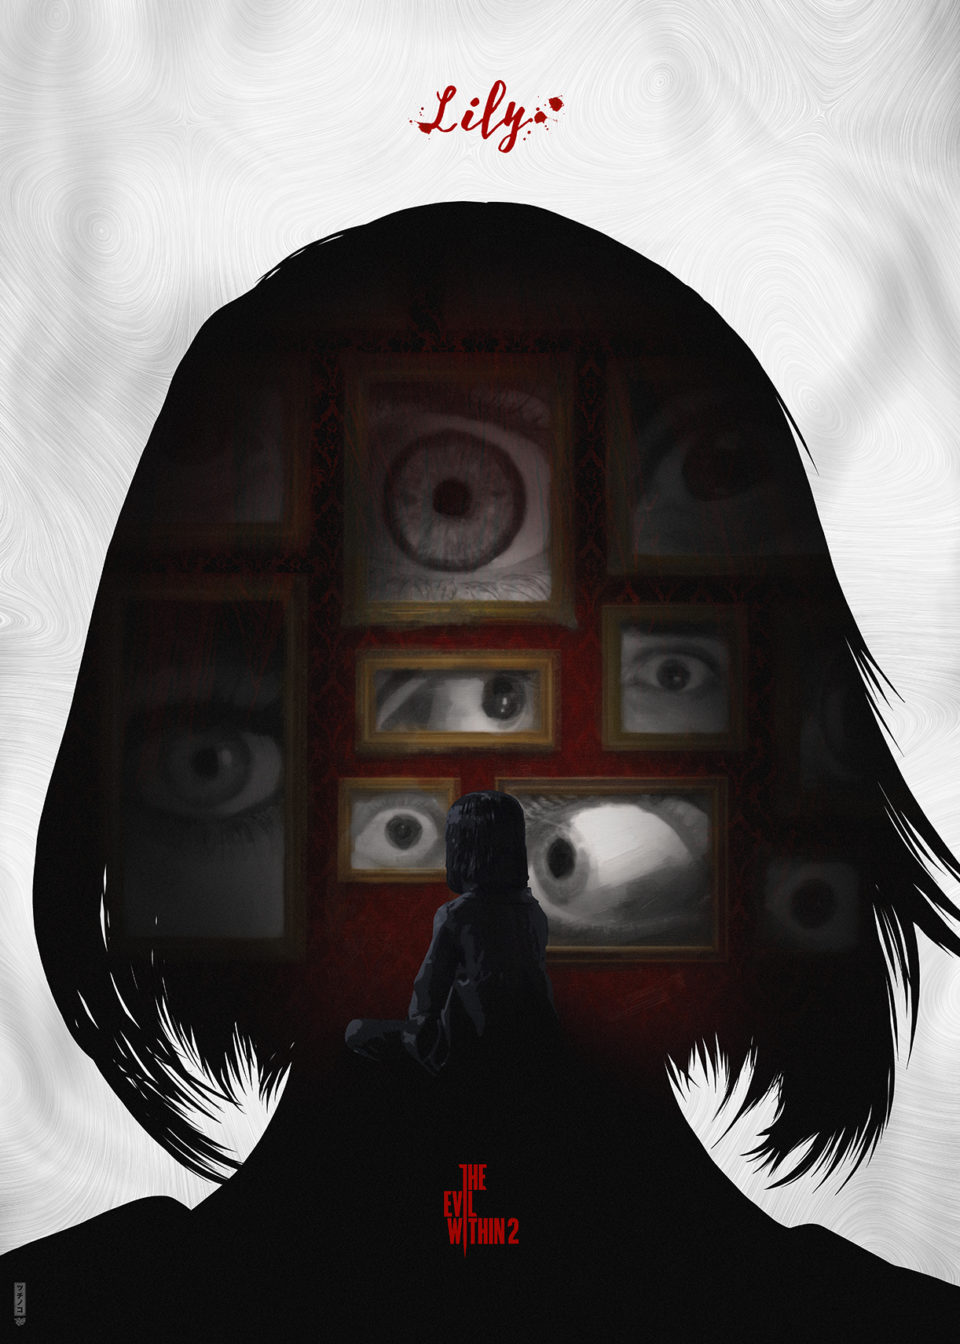 The Evil within 2 by Tsuchinoko